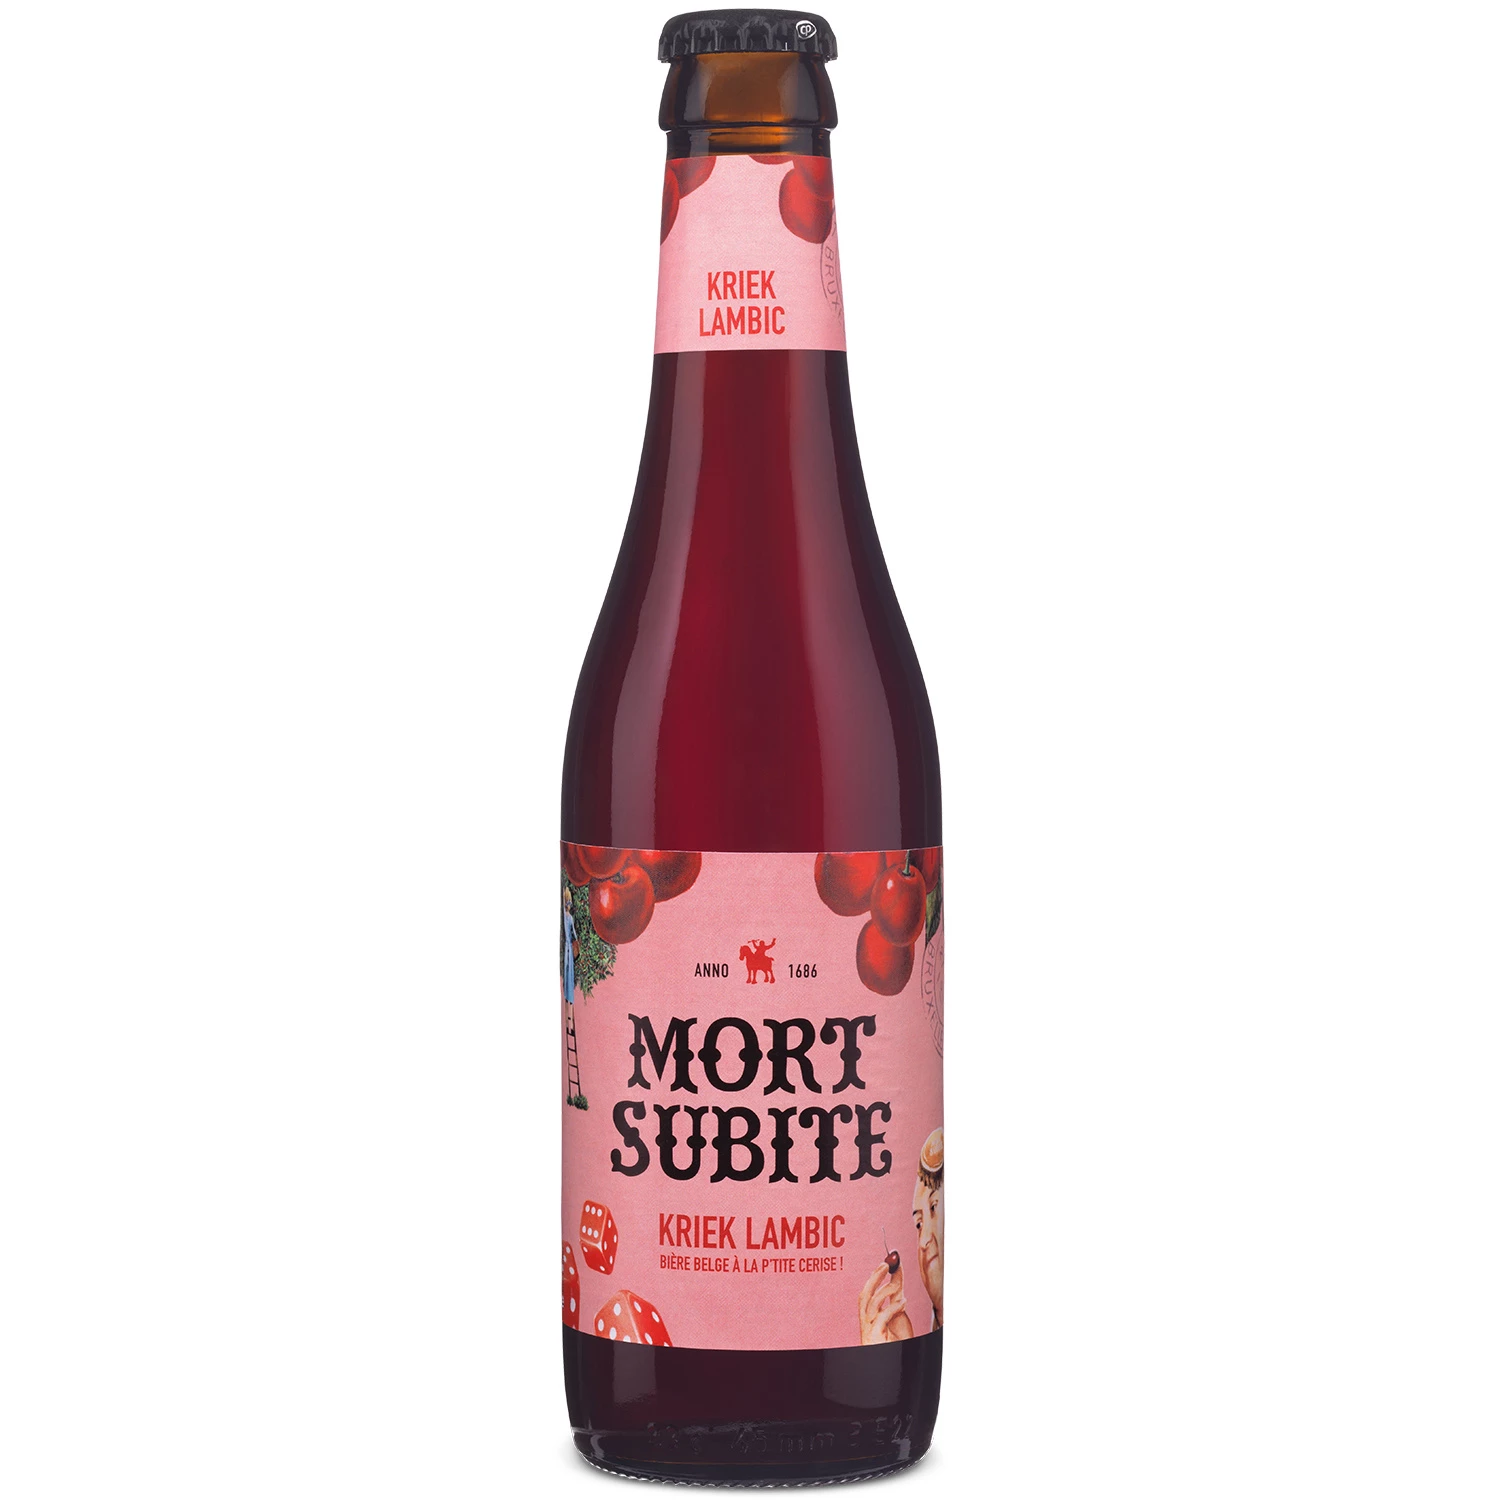 Красное пиво со вкусом вишни, 4°, 33cl - MORT SUBITE